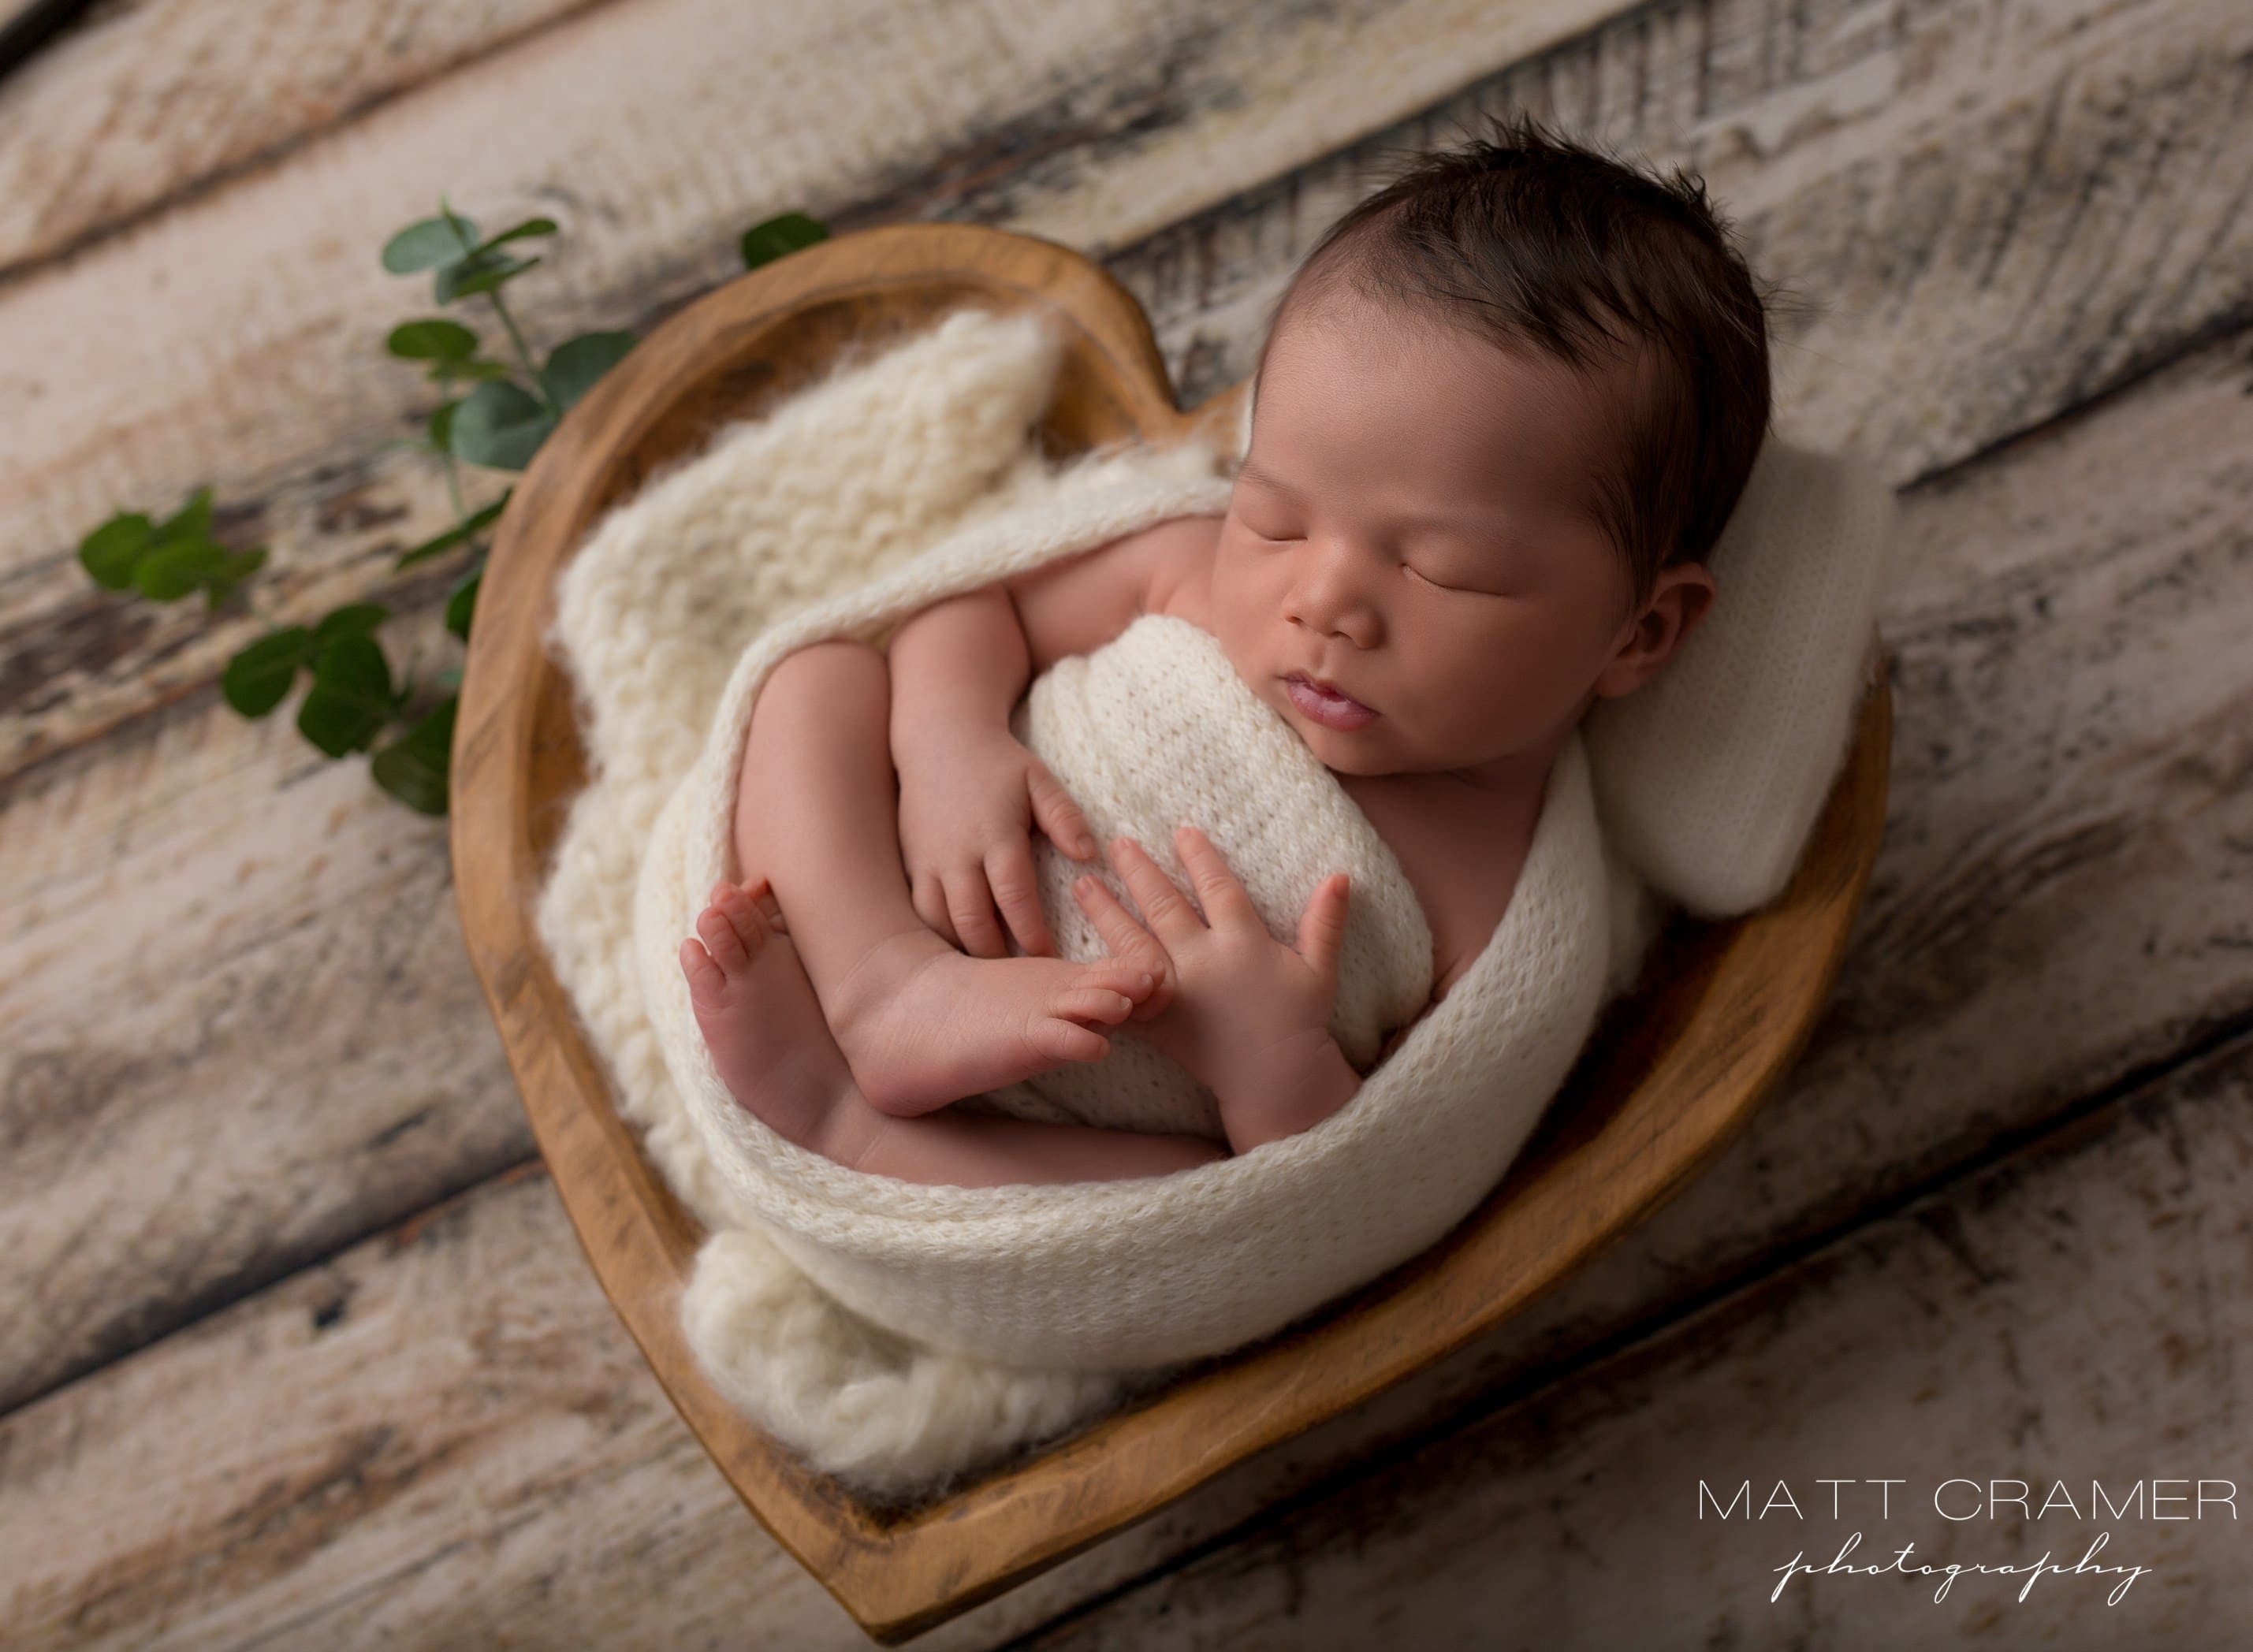 newborn baby boy in cream swaddle in wood heart prop during newborn photography photoshoot